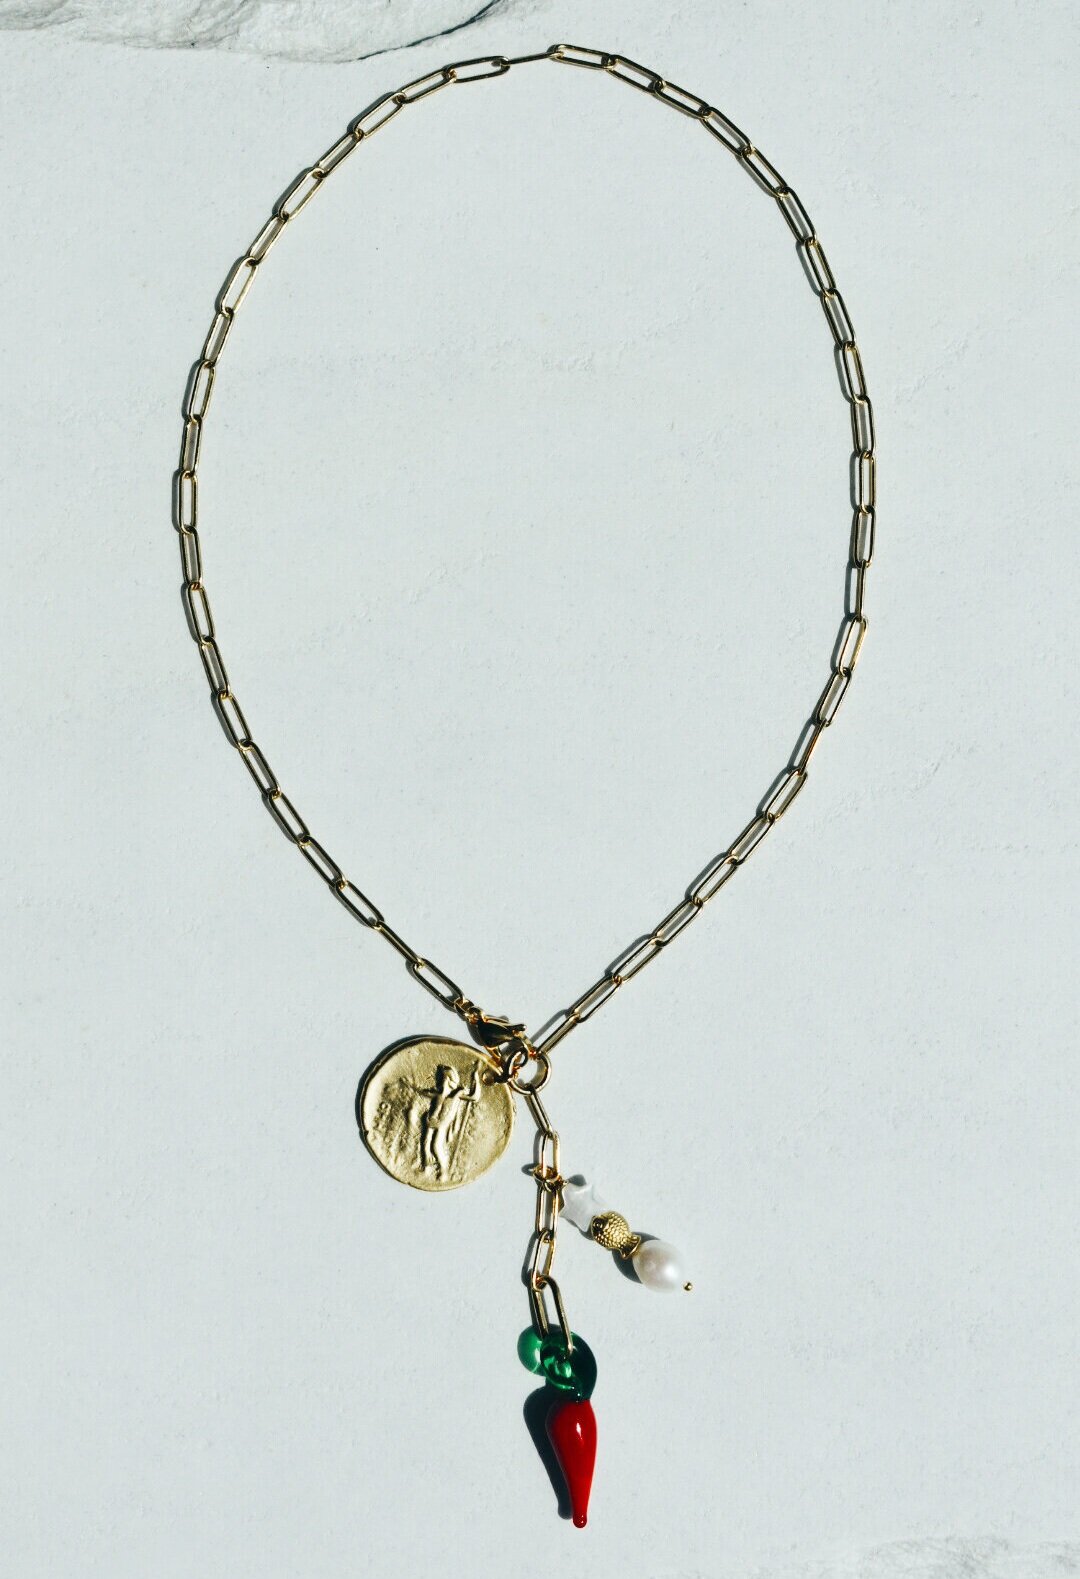 Lariat Monogram Necklace – HanaLaura